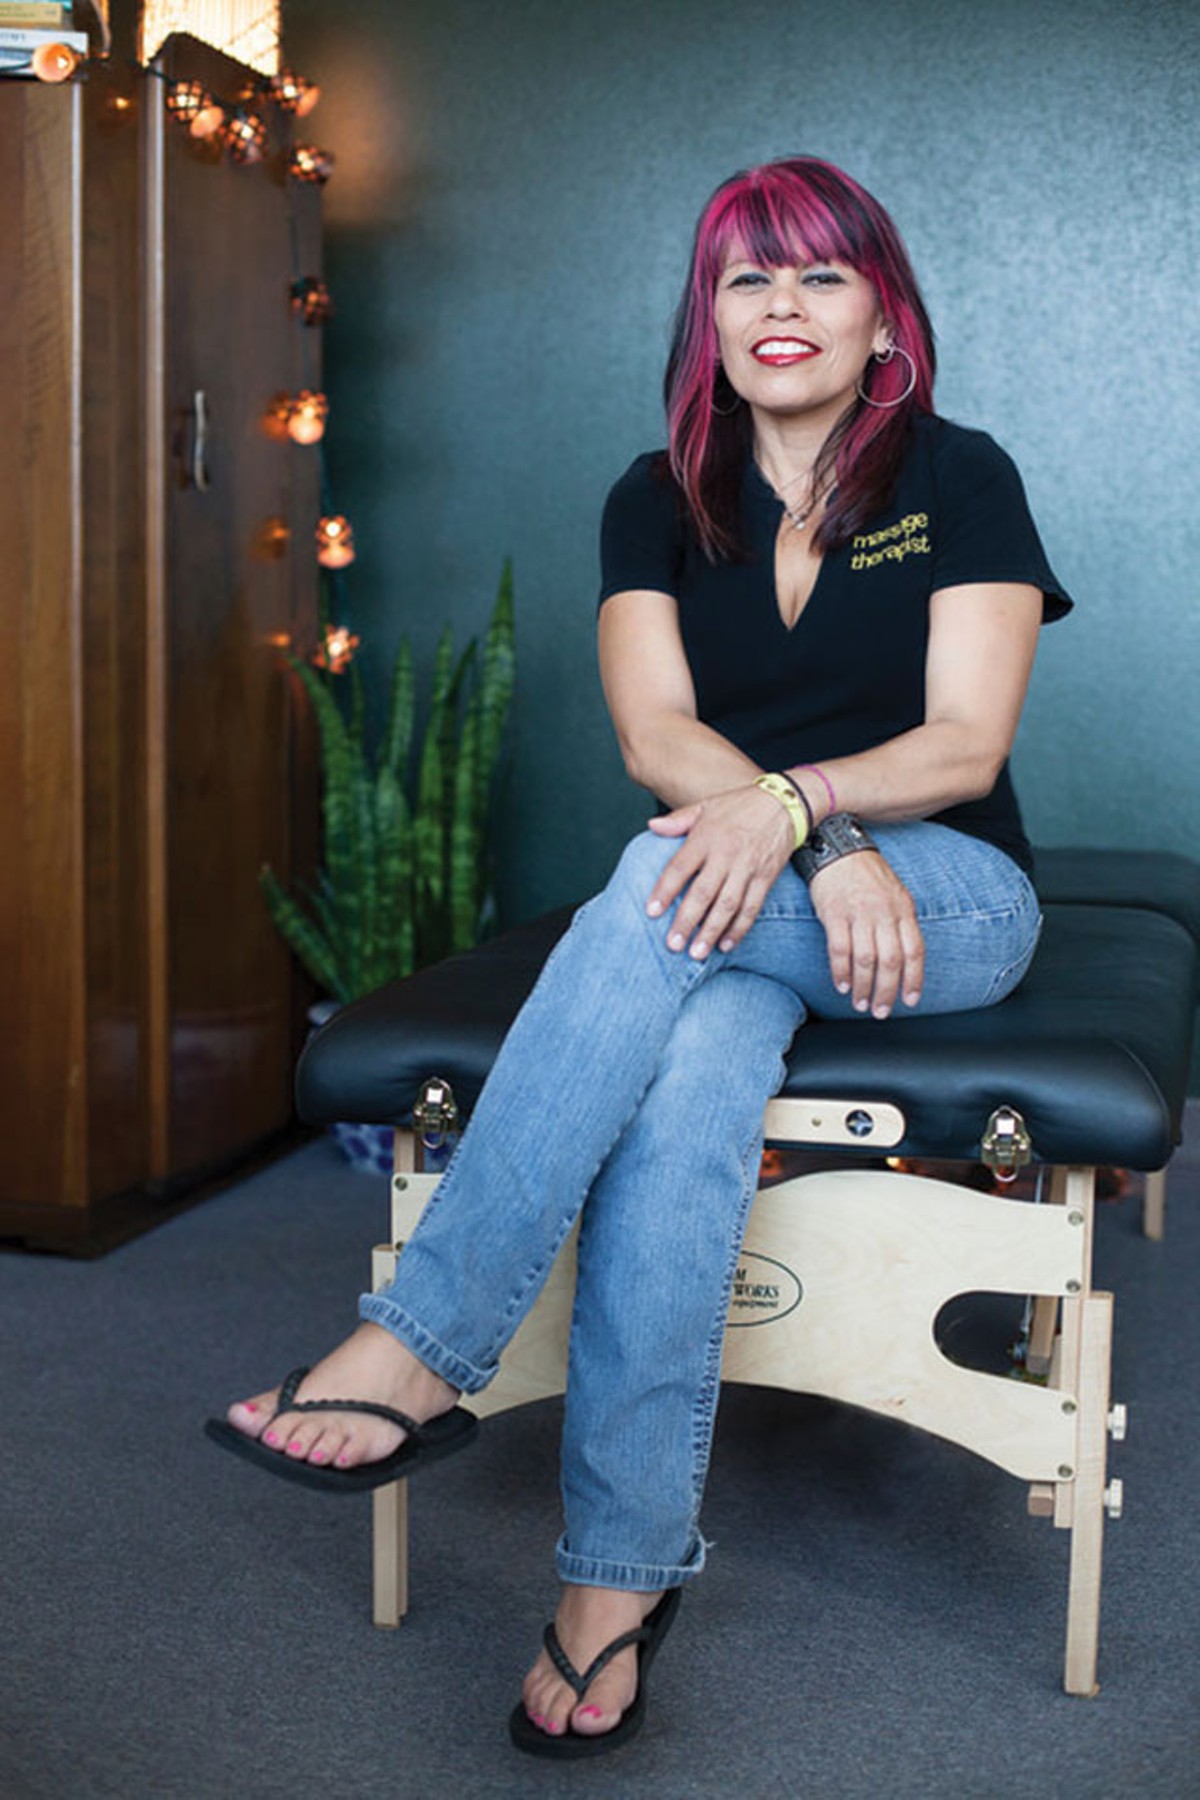 Best Massage Therapist 2013 | Winners | San Antonio